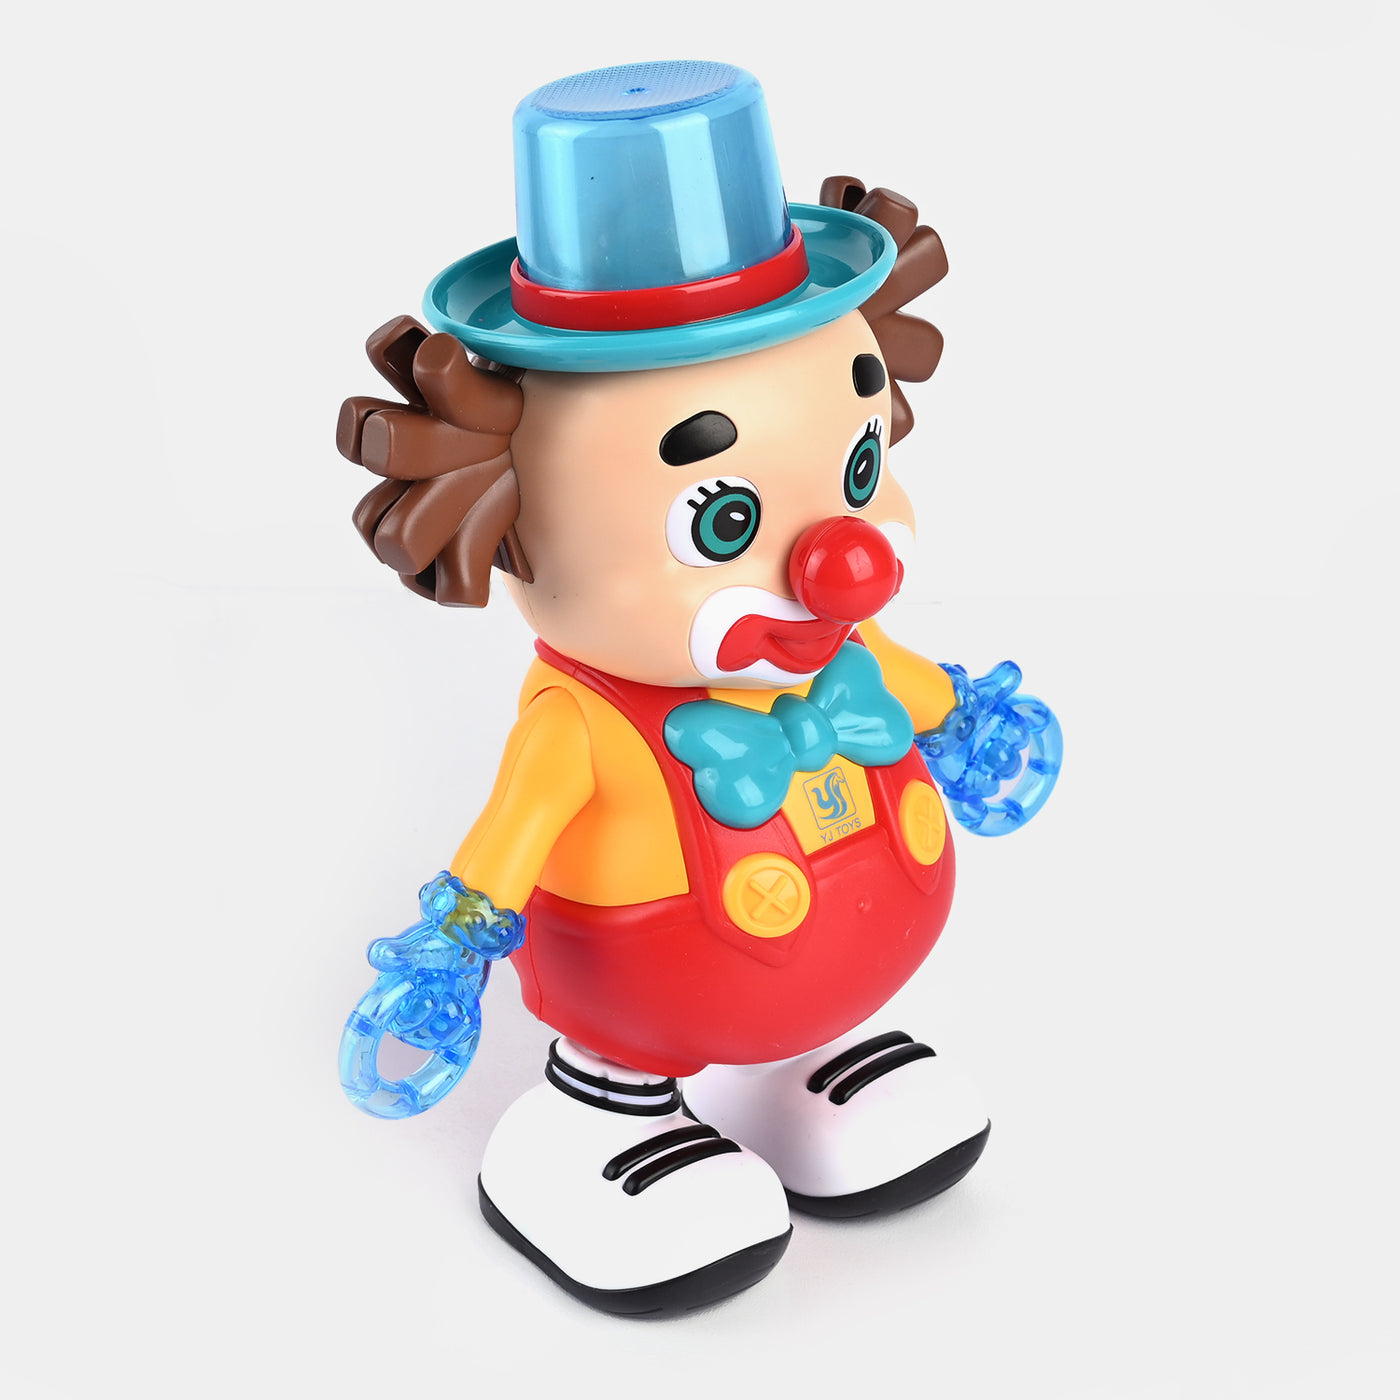 Dancing Clown Joker with Music Flashing Lights Toy